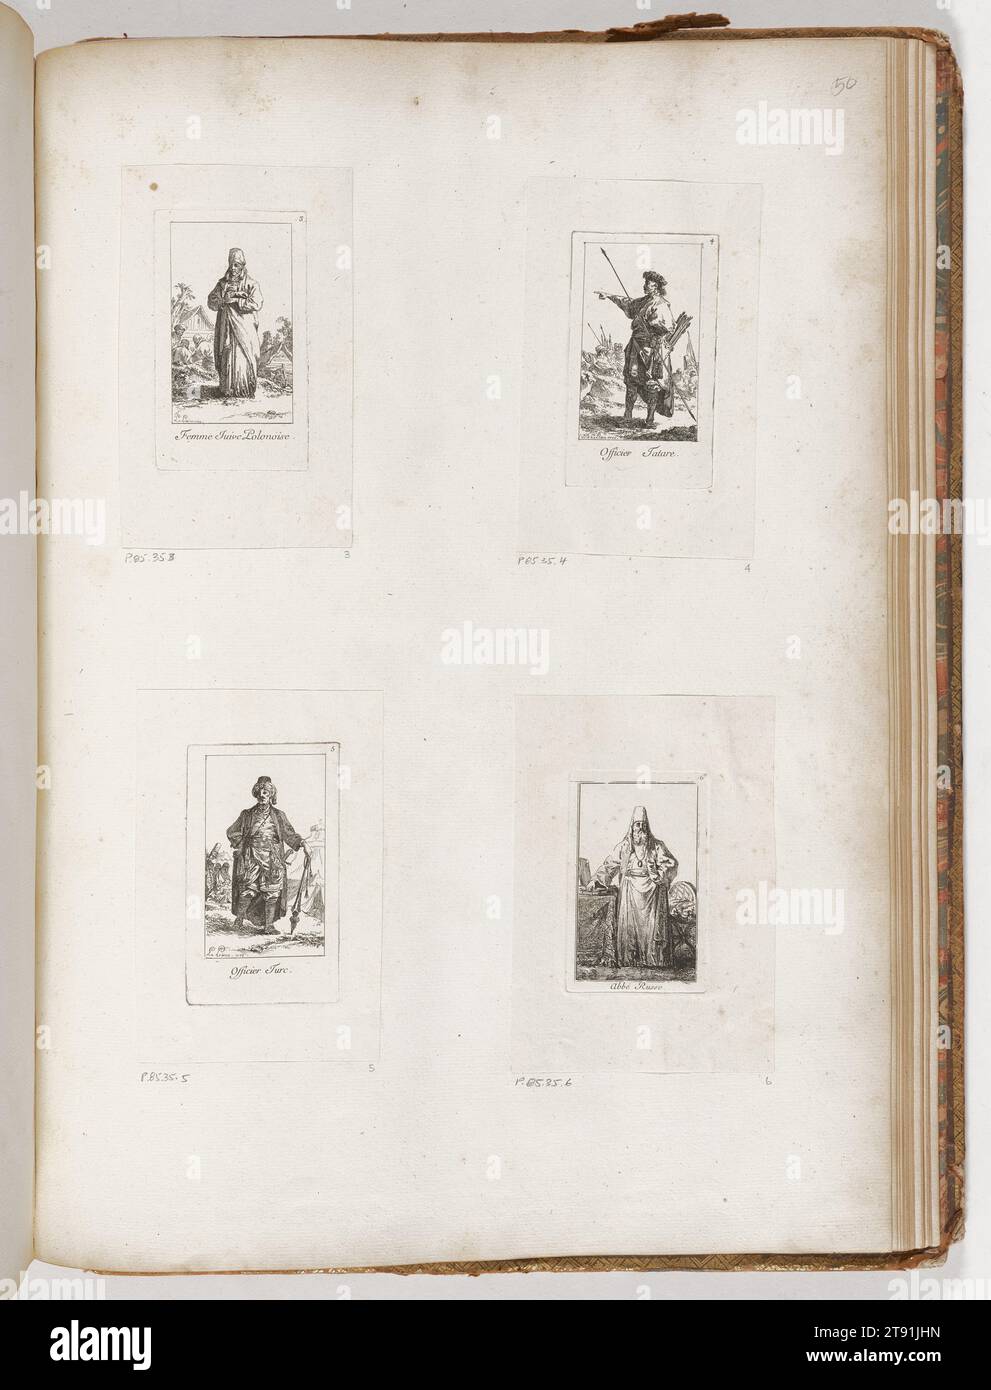 Tartar Officer, 1765, Jean-Baptiste Le Prince, French, 1734 - 1781, 3 1/2 x 2 1/16 in. (8.89 x 5.24 cm) (image)4 1/2 x 2 9/16 in. (11.43 x 6.51 cm) (plate)6 9/16 x 4 1/8 in. (16.67 x 10.48 cm) (sheet), Etching, France, 18th century Stock Photo